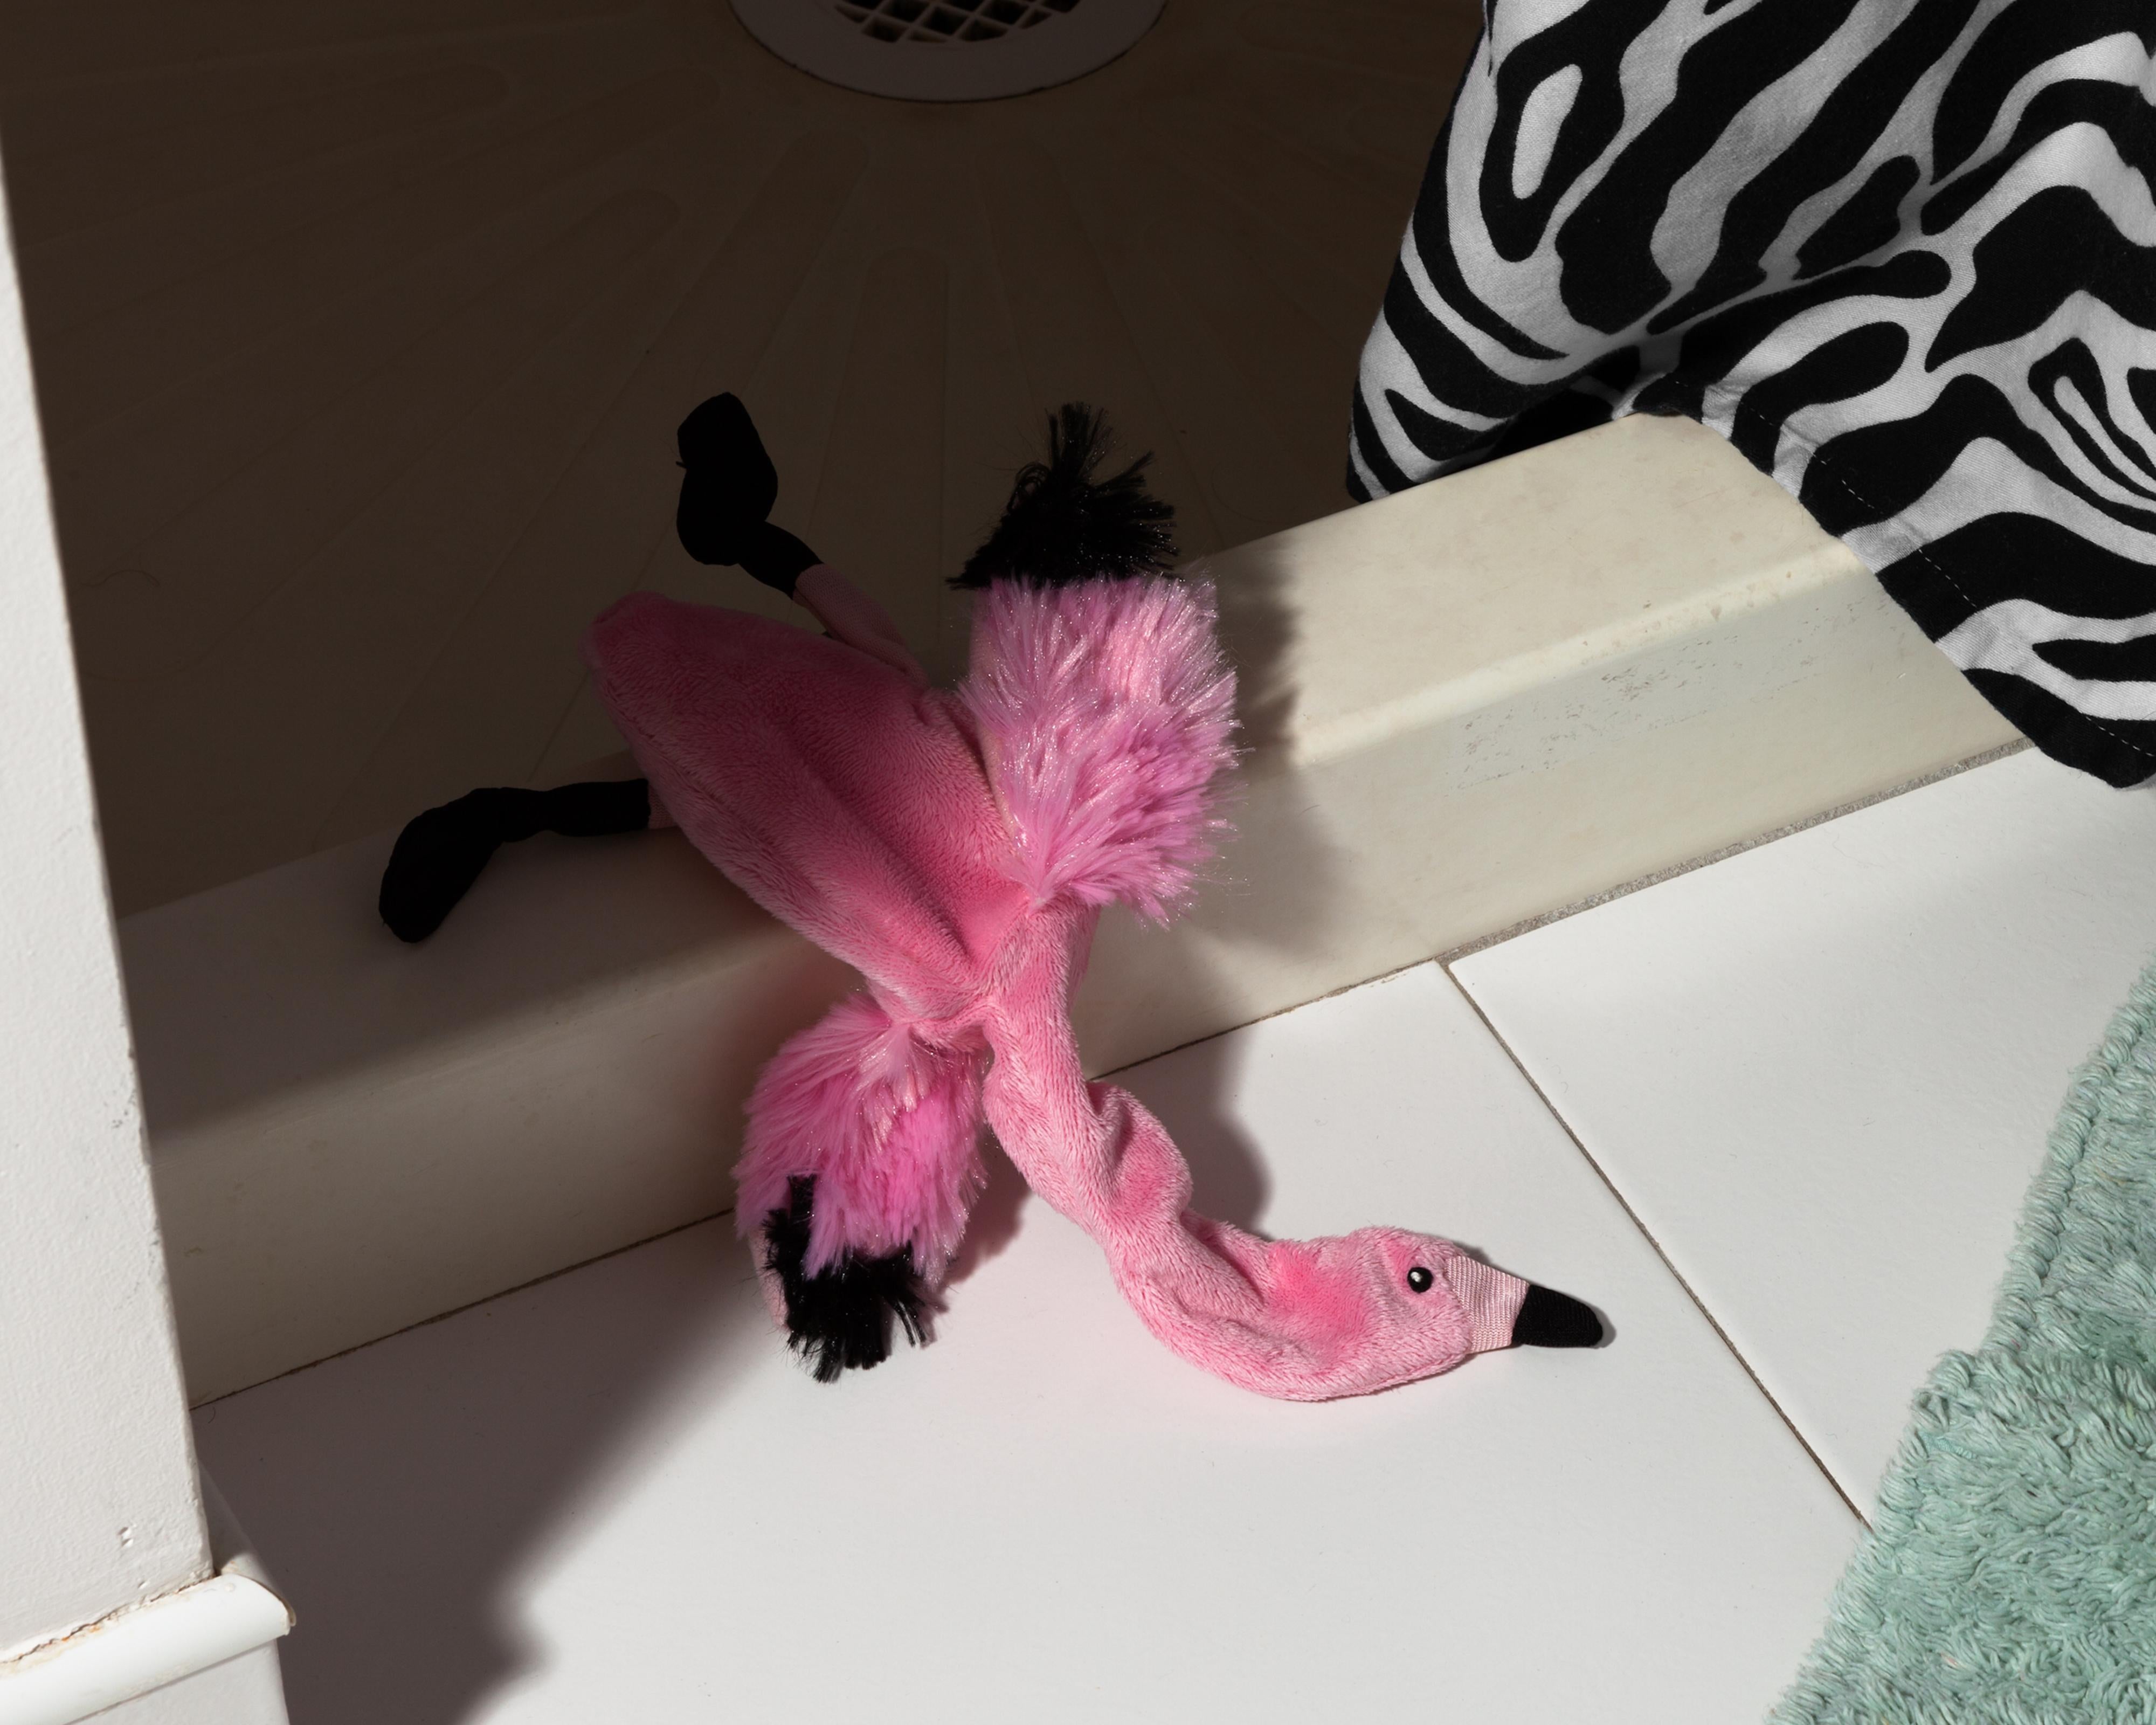 Morbidity & Mortality: Flamingo Humorvolle Fotografie von Hundespielzeug in Krimsszene – Photograph von Jeanette May